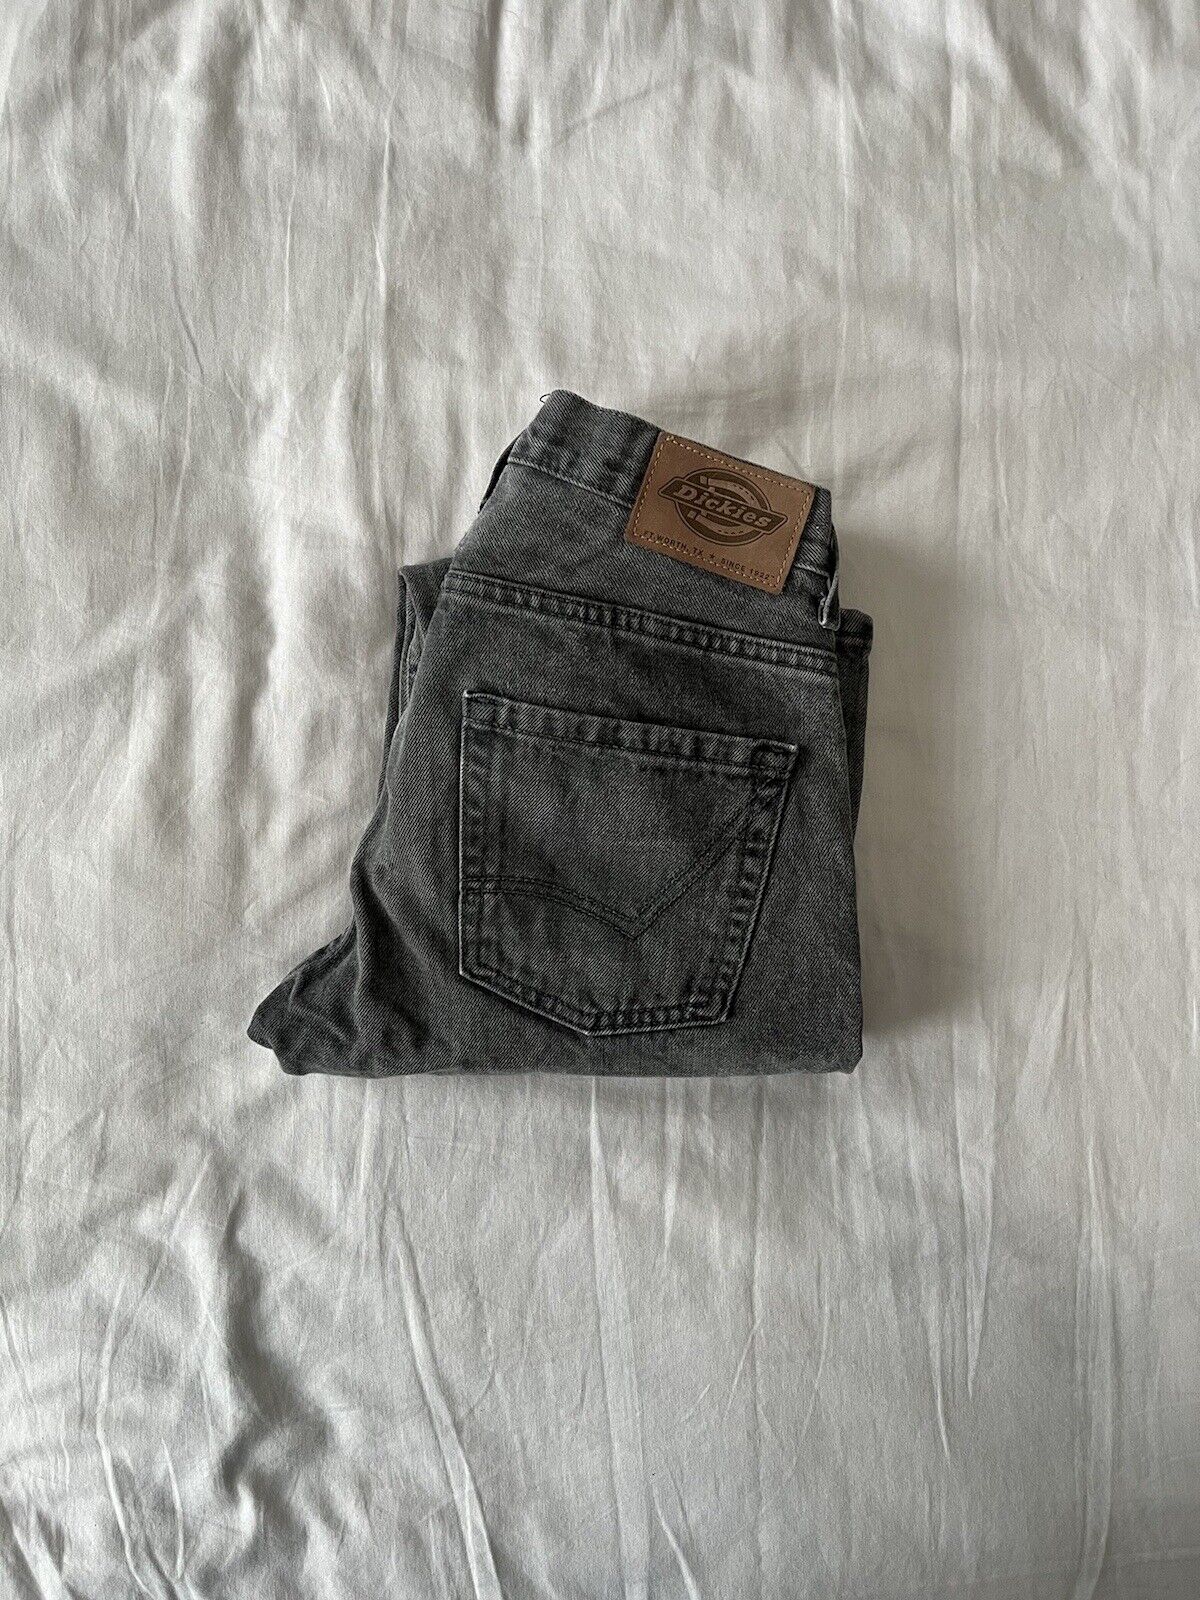 Dickies Mens Faded Black Denim Jeans Size 28x32 - image 2